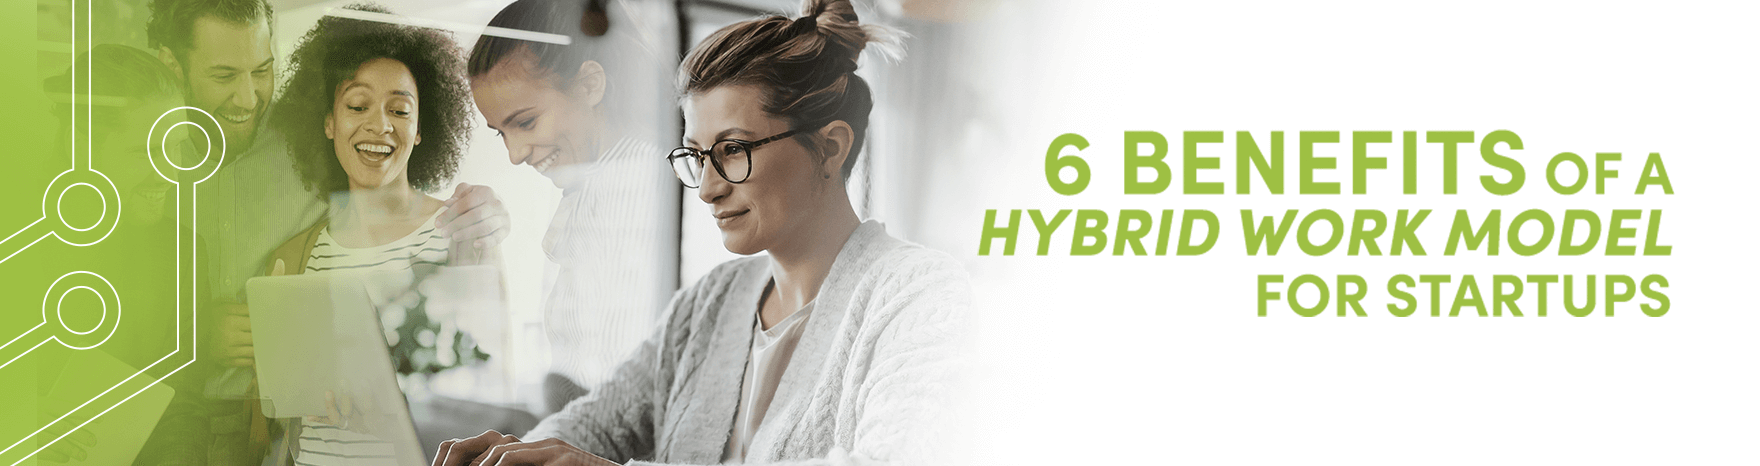 6 Benefits of a Hybrid Work Model for Startups